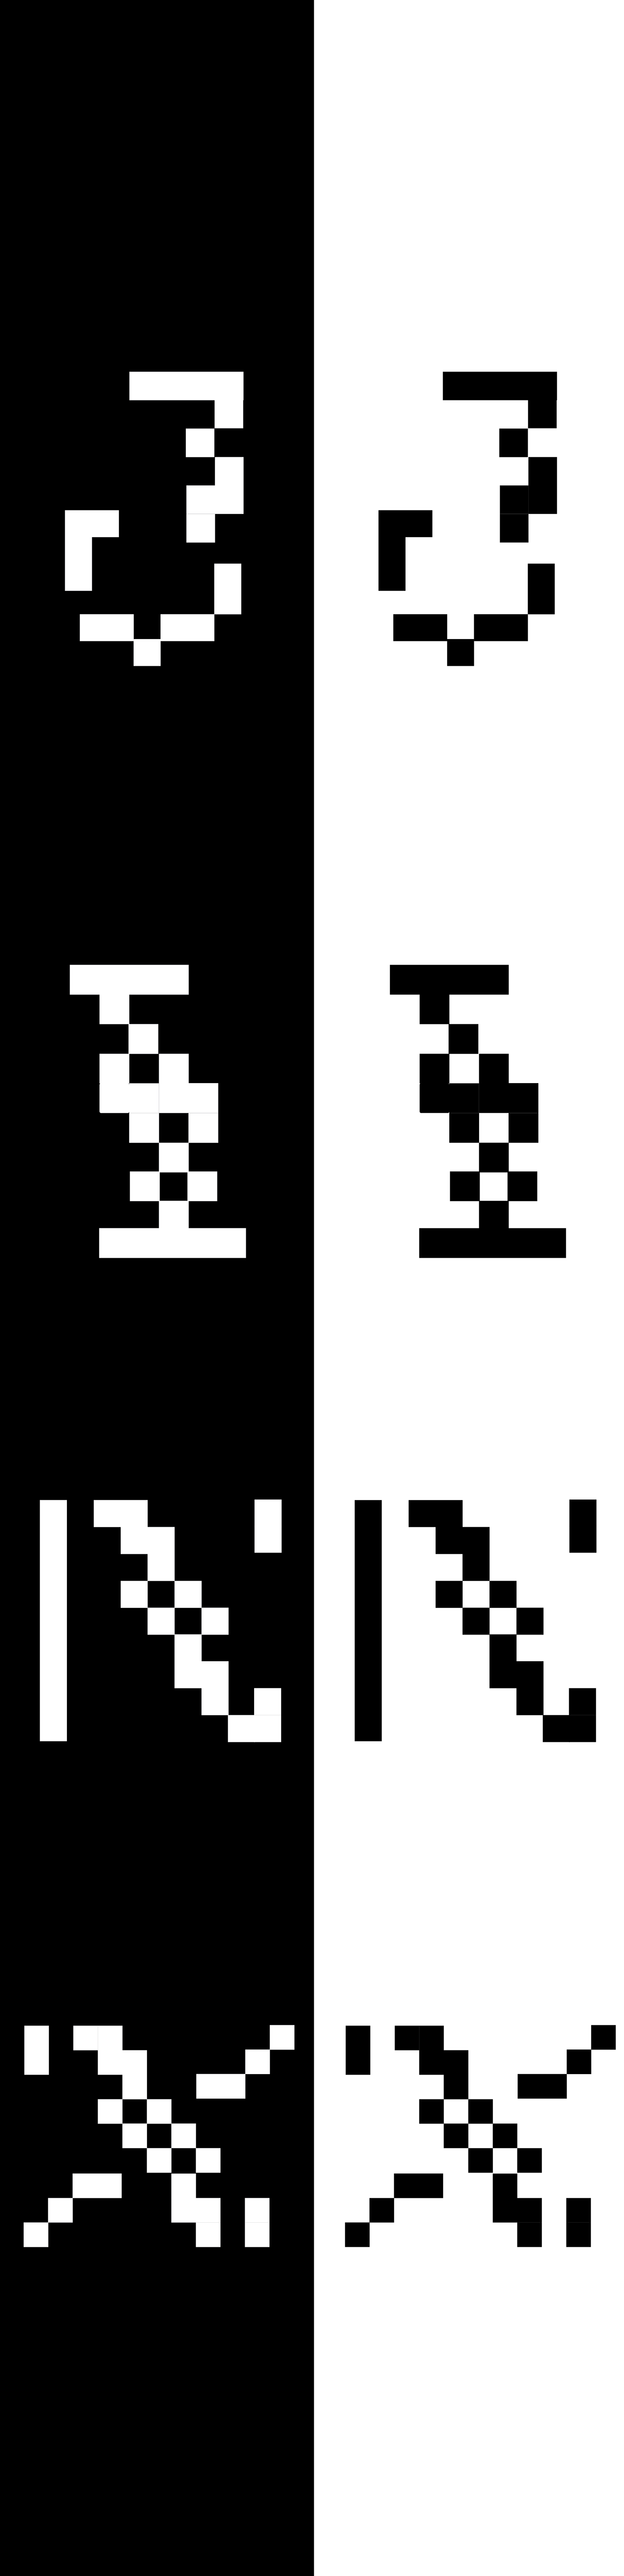 Display type pixel